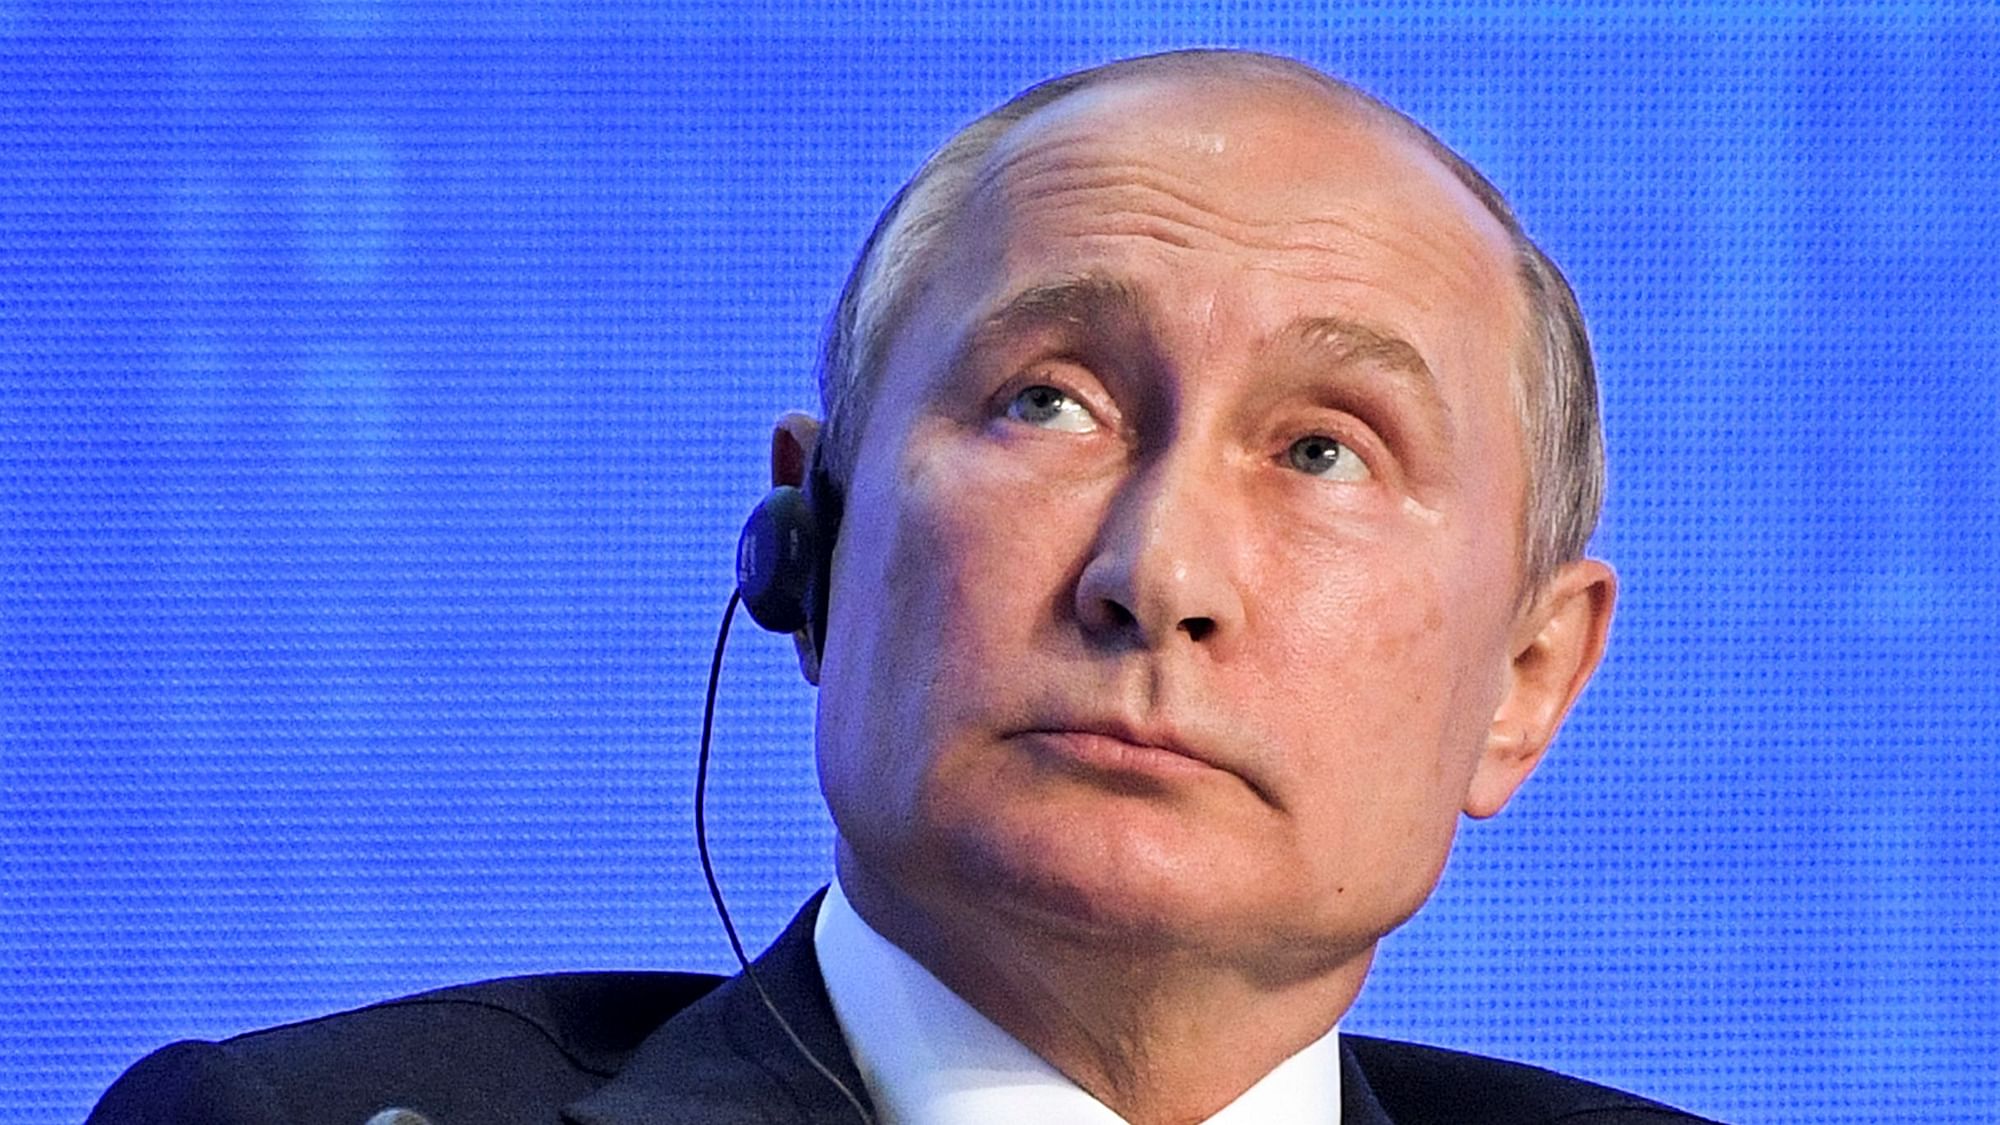 File image of Russian president Vladimir Putin.